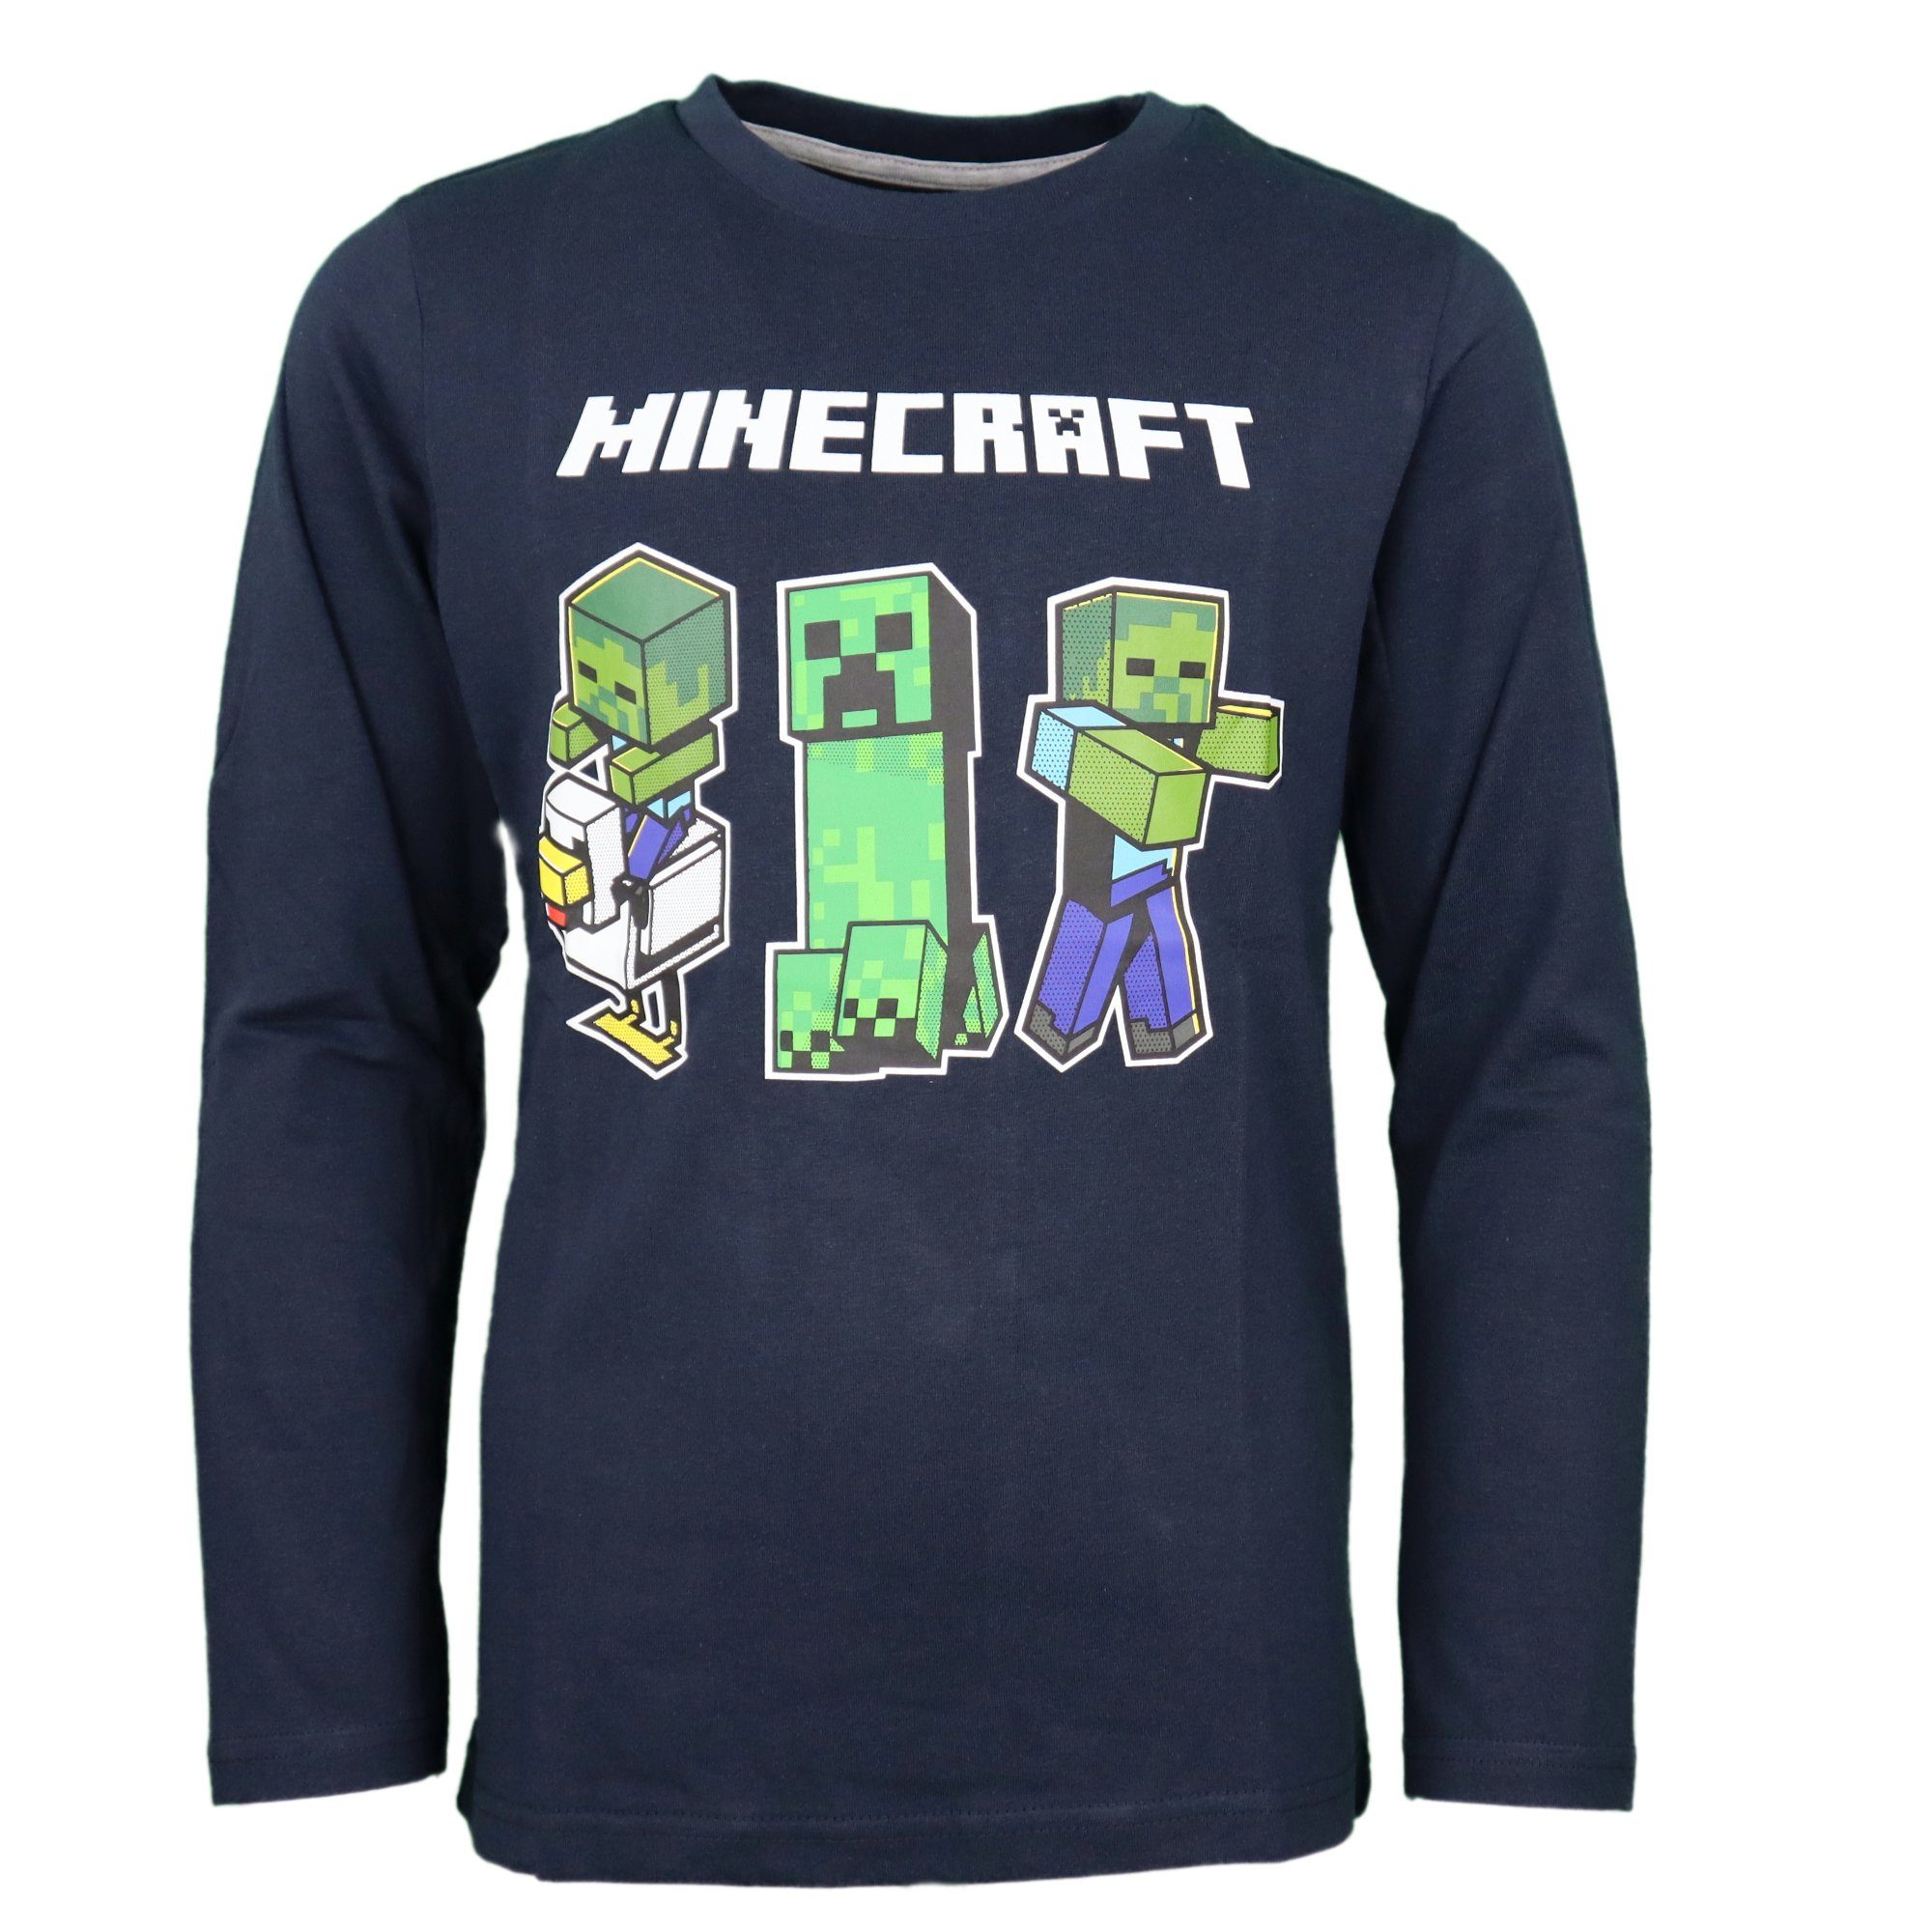 [Super niedriger Preis erzielt] Minecraft Langarmshirt Creeper Kinder Shirt Baumwolle 116 bis 100% Gr. 152